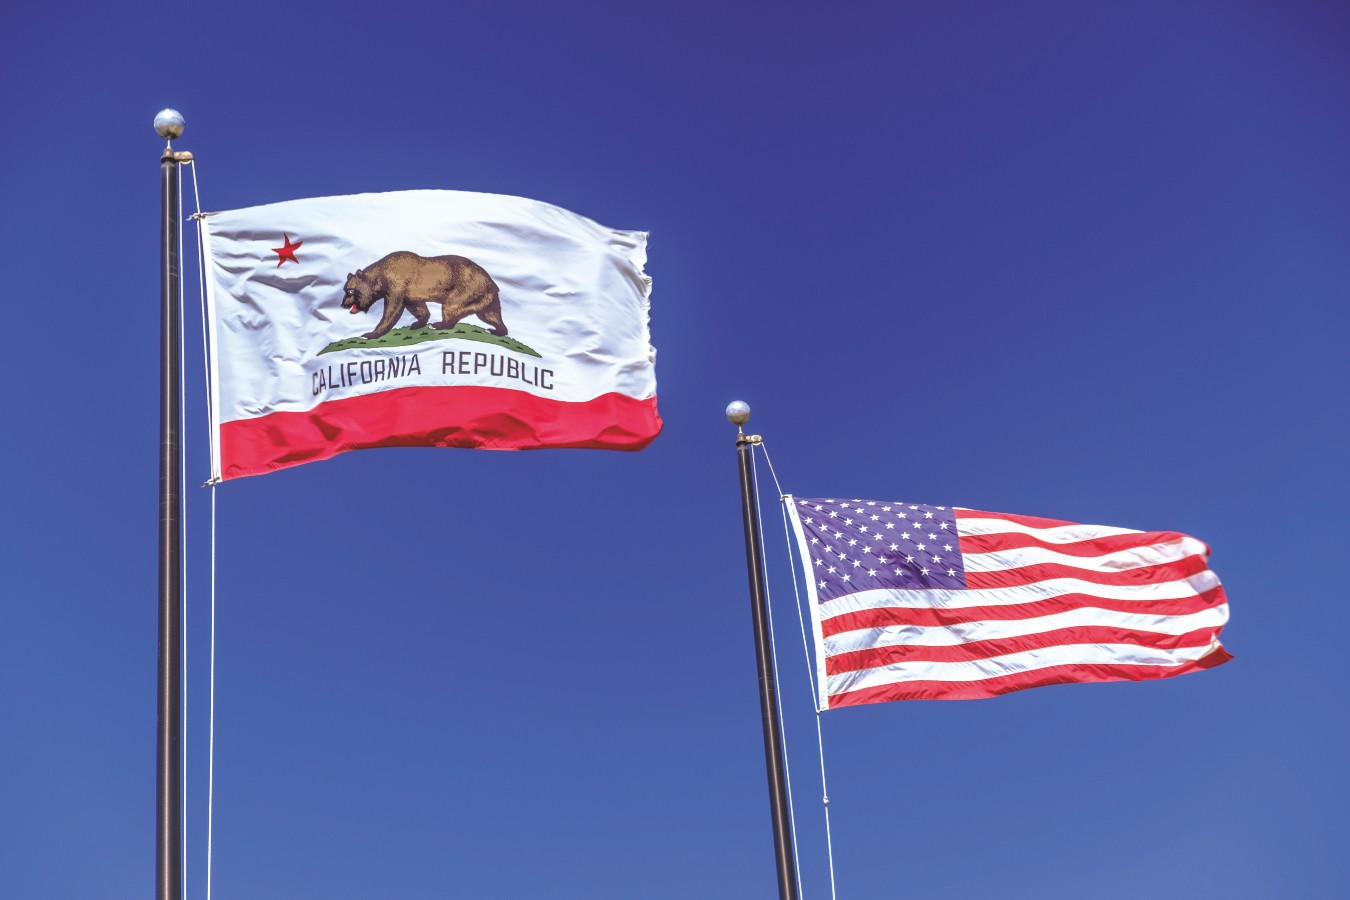 California’s political standing among Democrats a big winner in Gavin